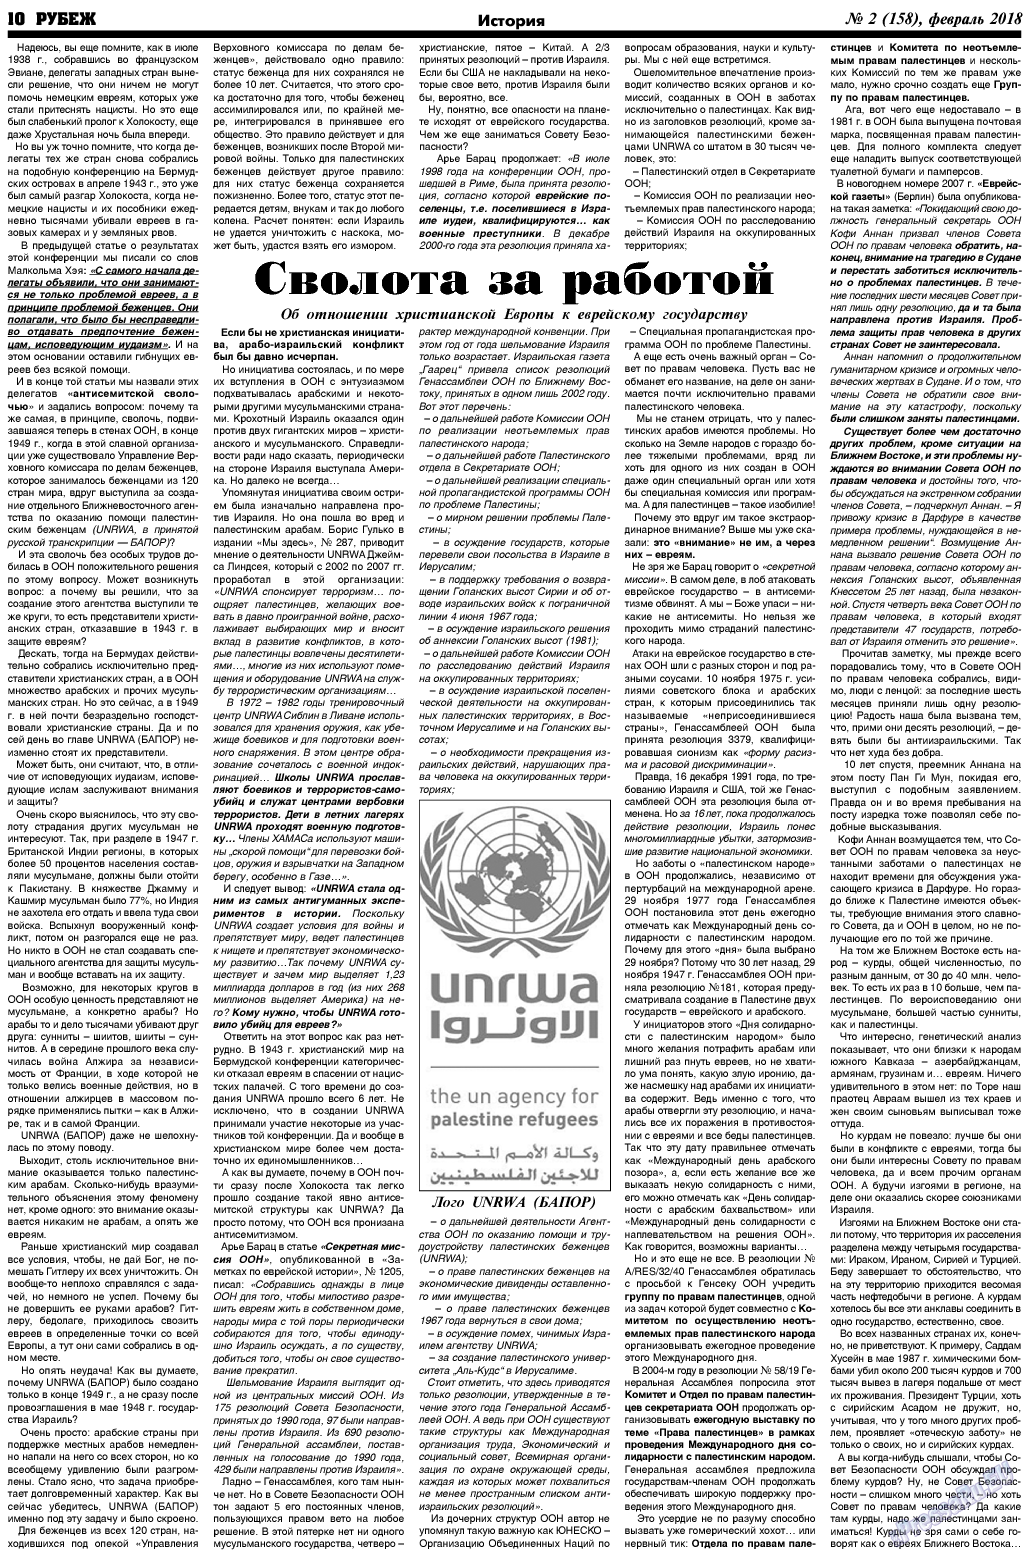 Рубеж, газета. 2018 №2 стр.10